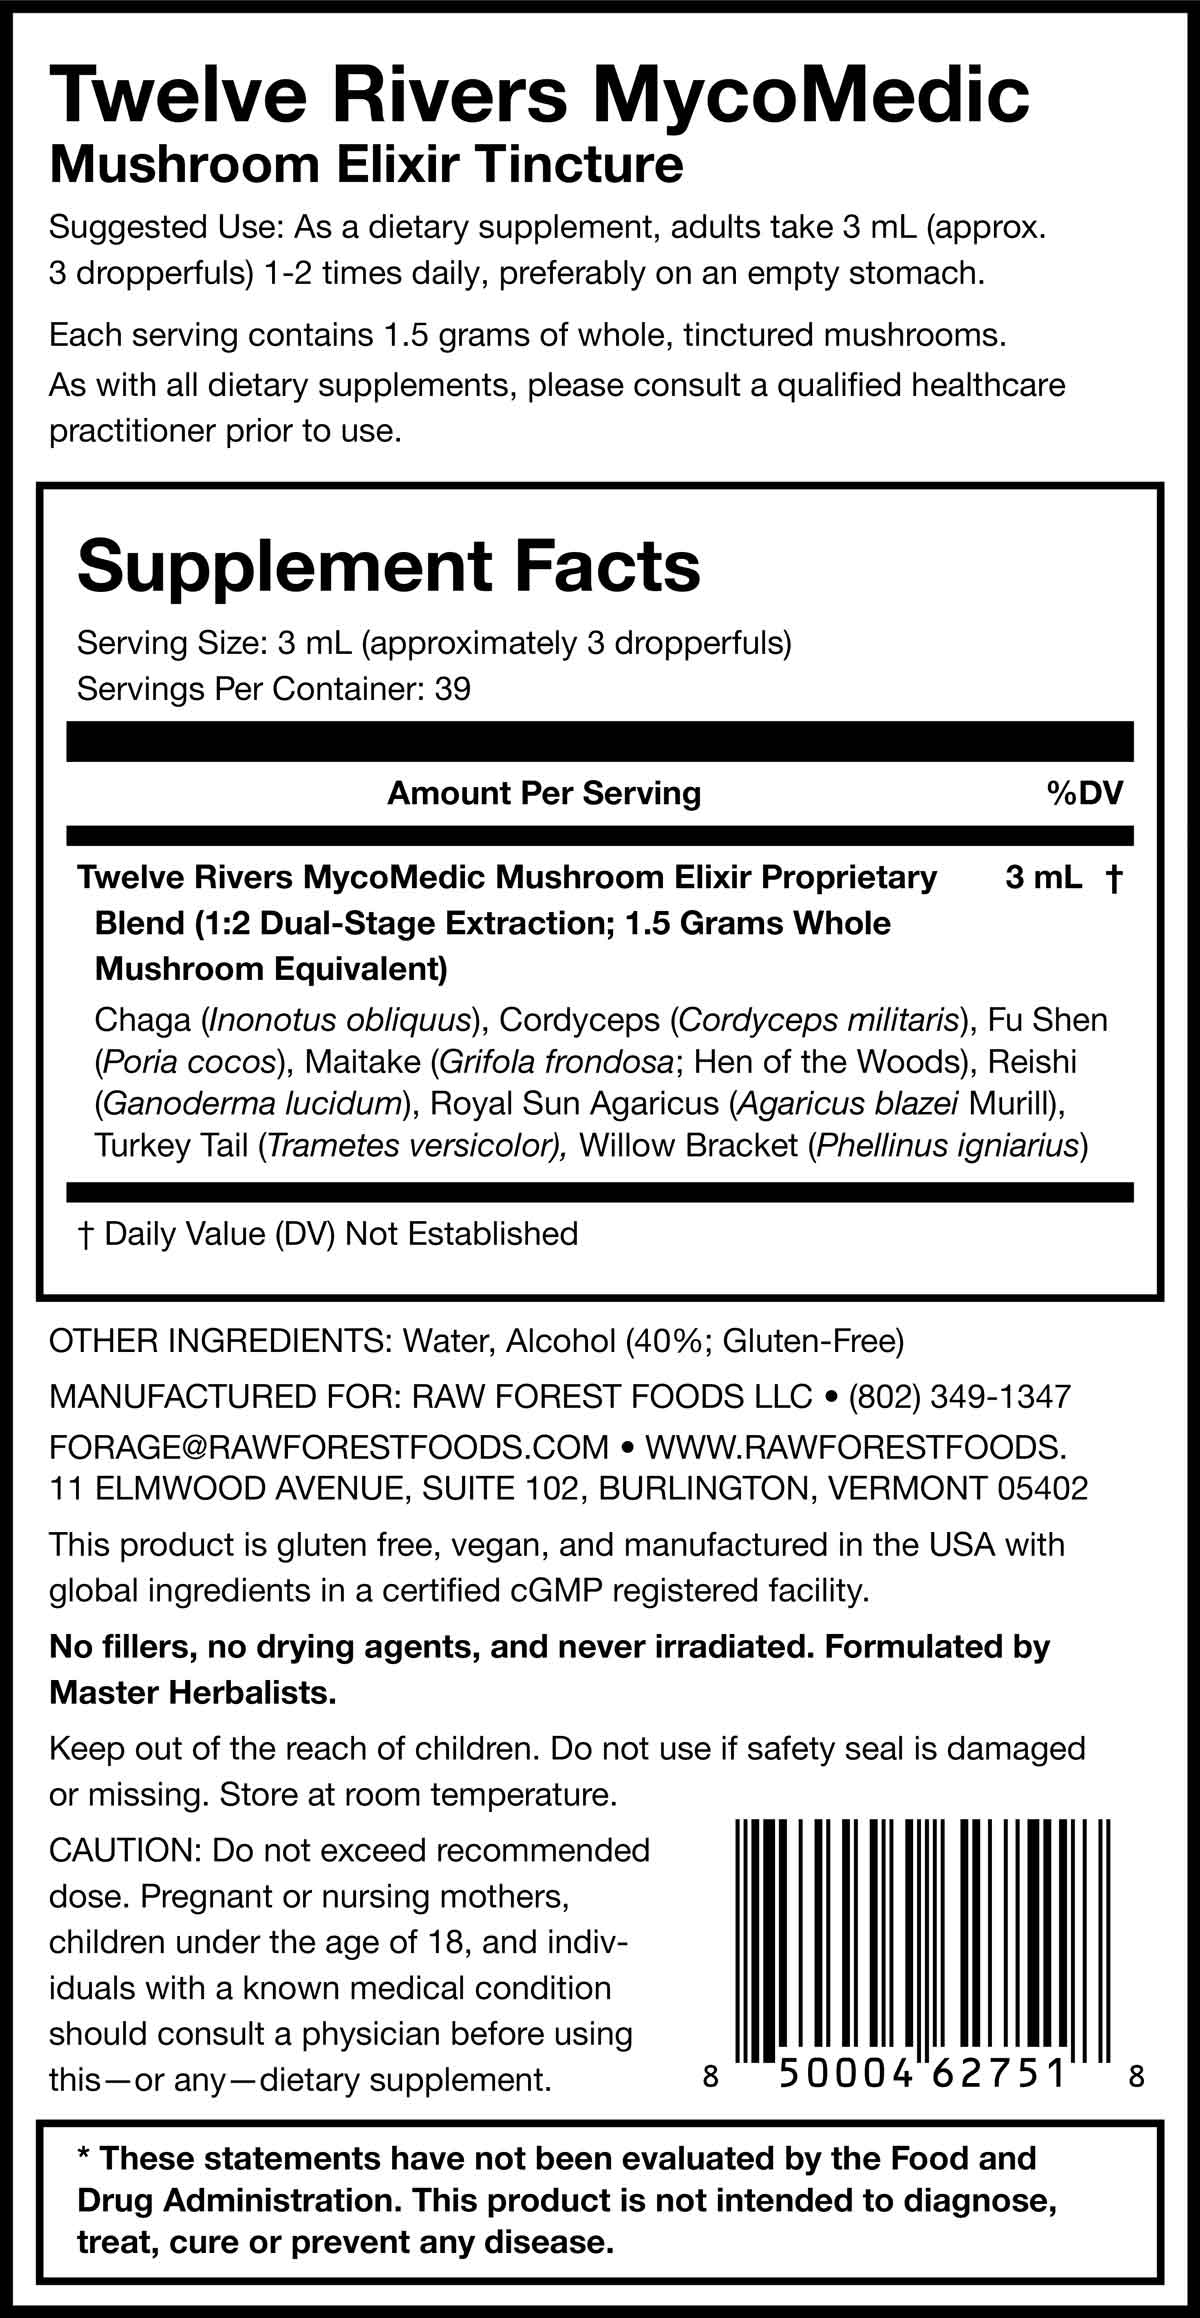 Supplement facts panel for Twelve Rivers MycoMedic Mushroom Elixir Tincture